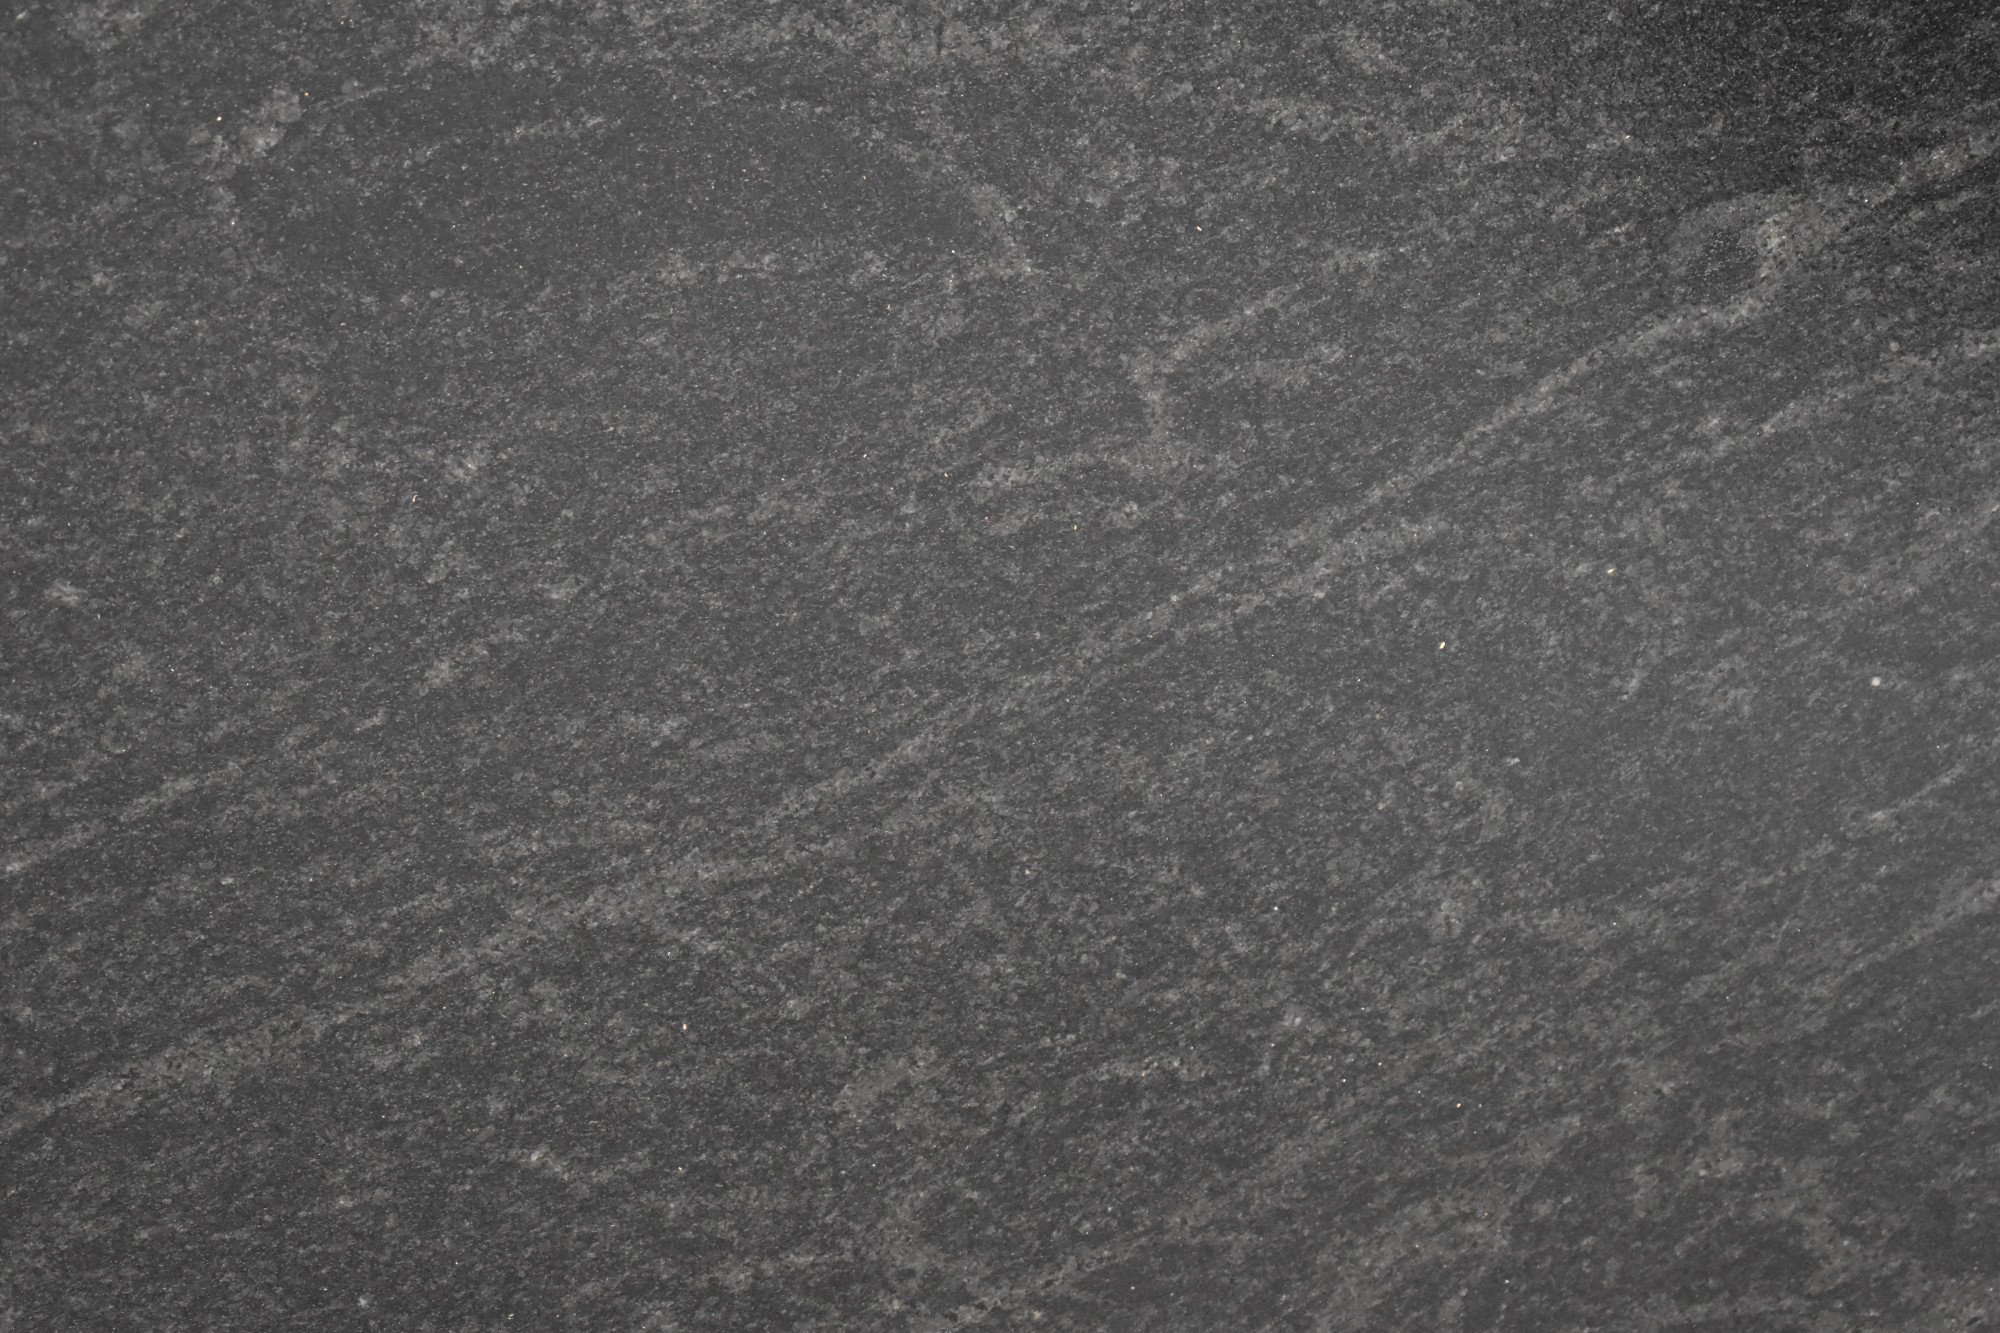 Negresco Leathered Granite